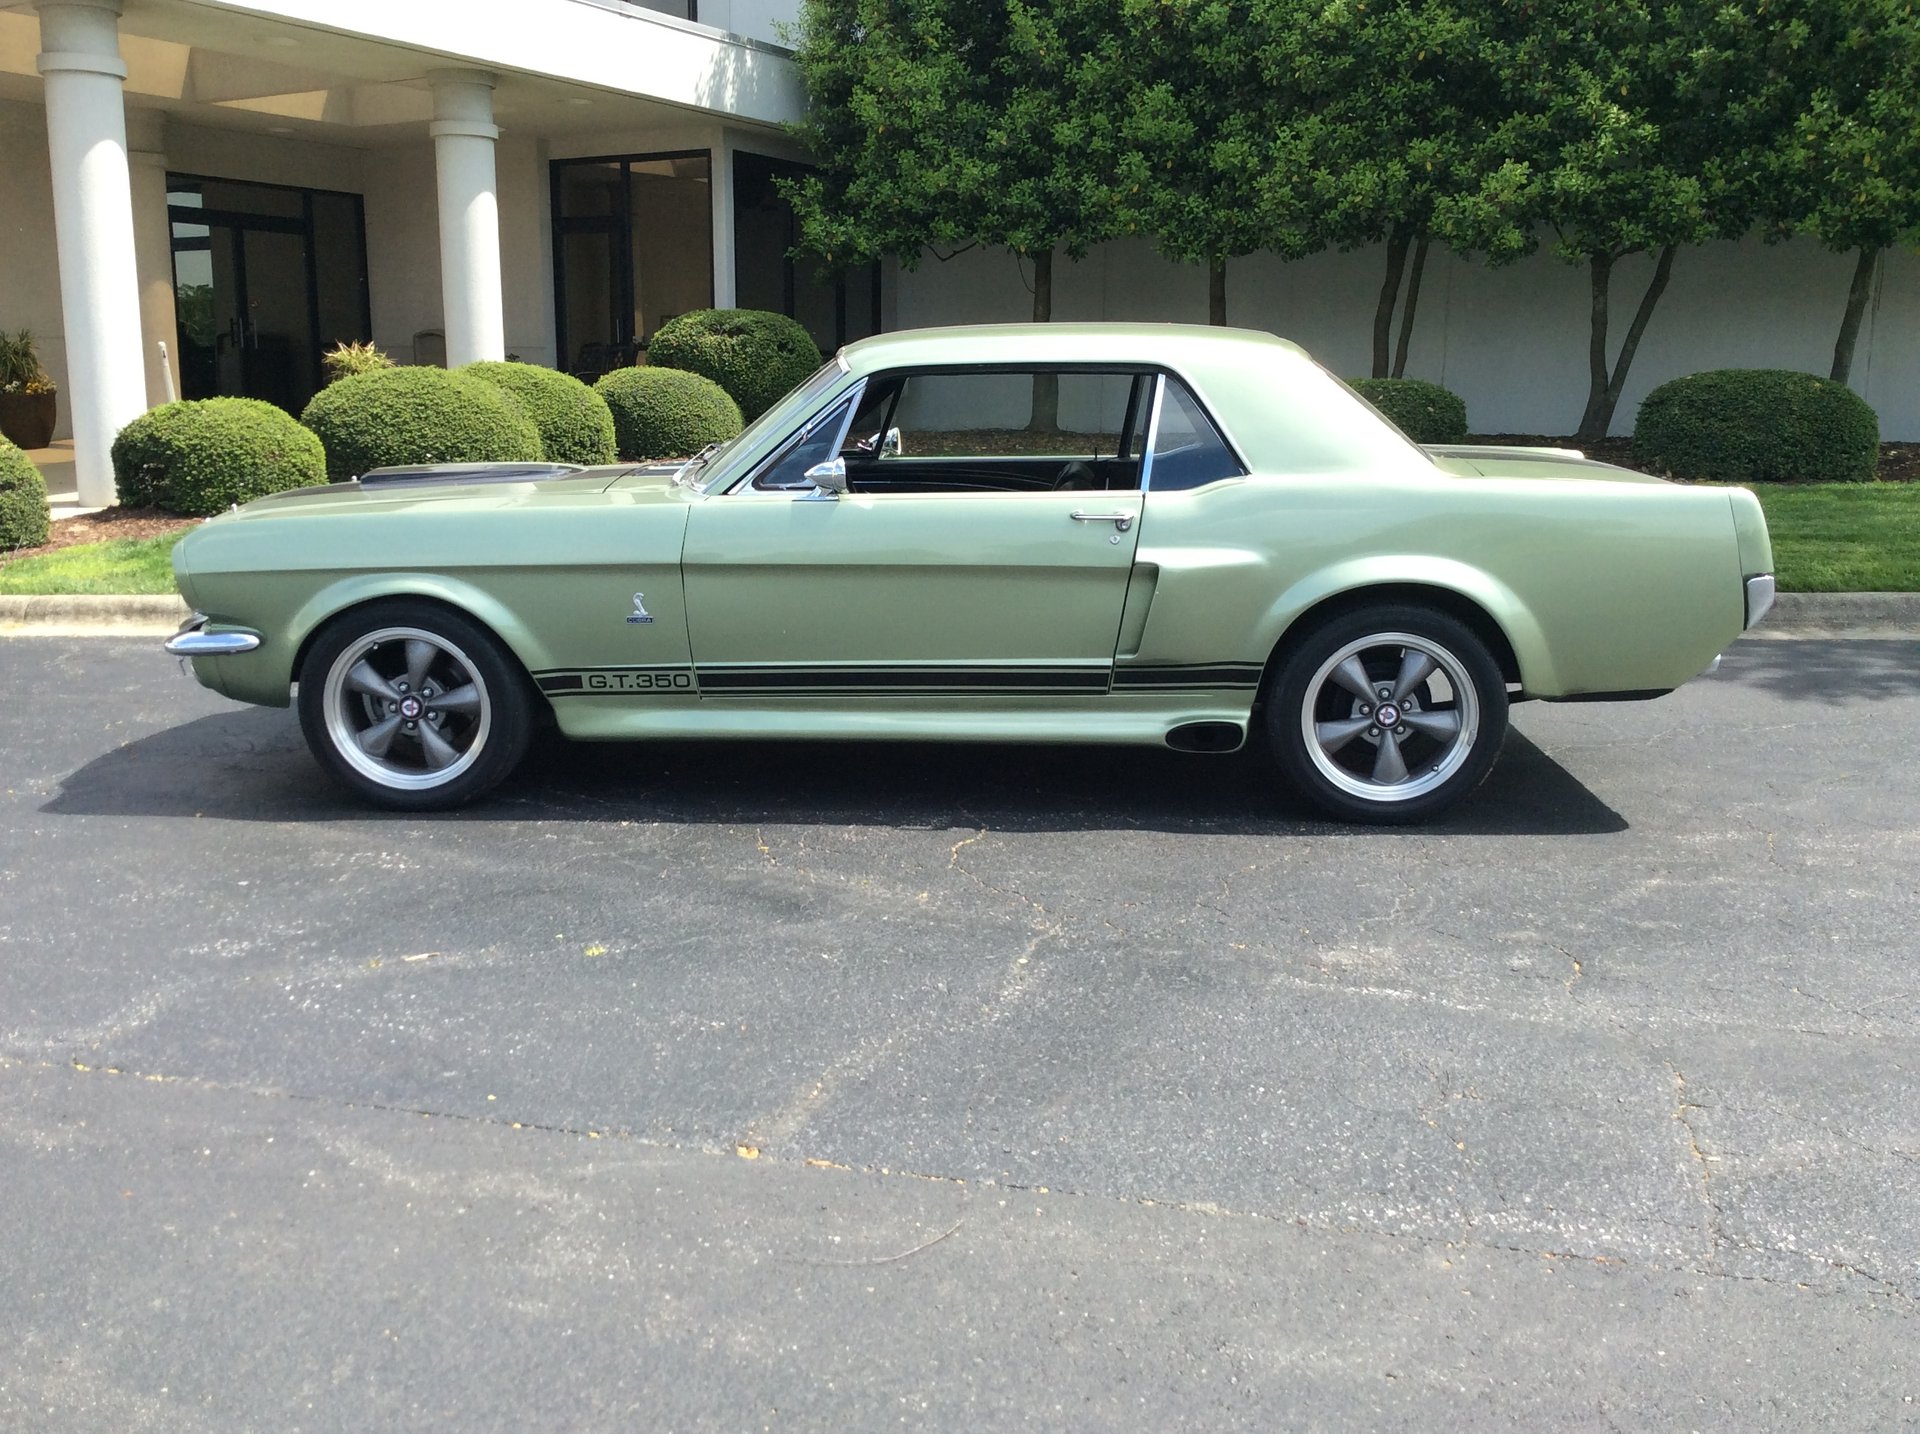 Шины мустанг. Реплика Форд Мустанг 1967. Ford Mustang Replica. Реплика под Мустанг. Форд 1966 года купить.